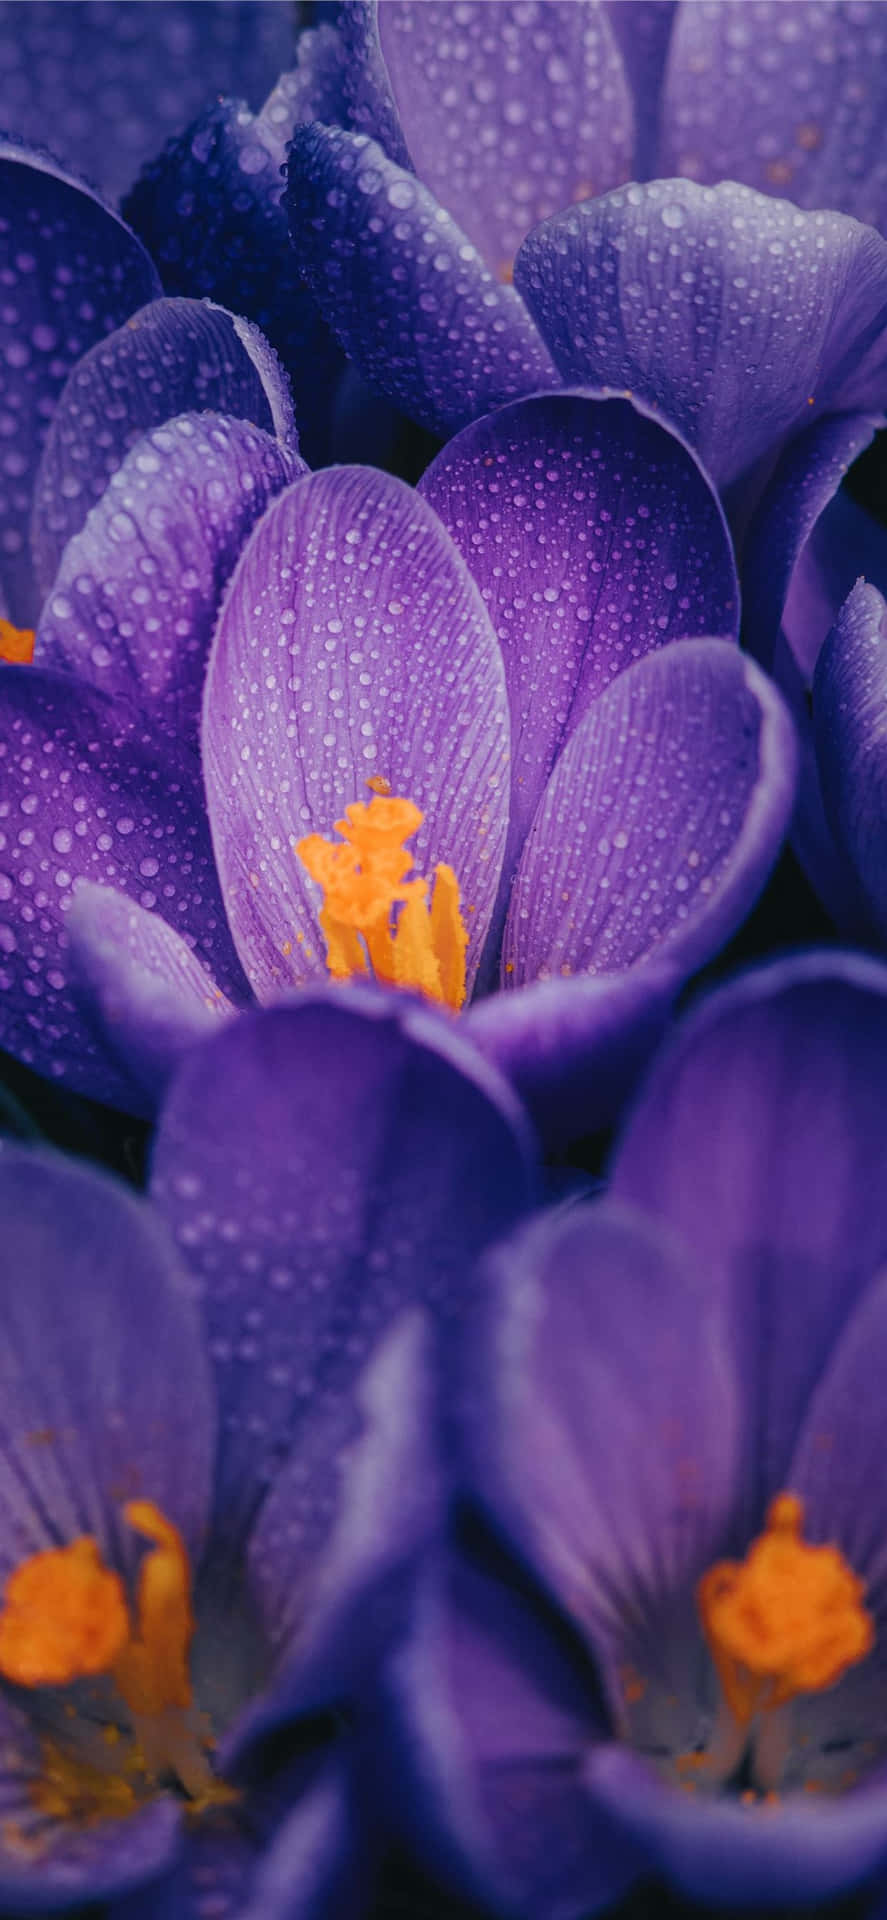 Close-Up Capture of Wet Purple Flowers Wallpaper